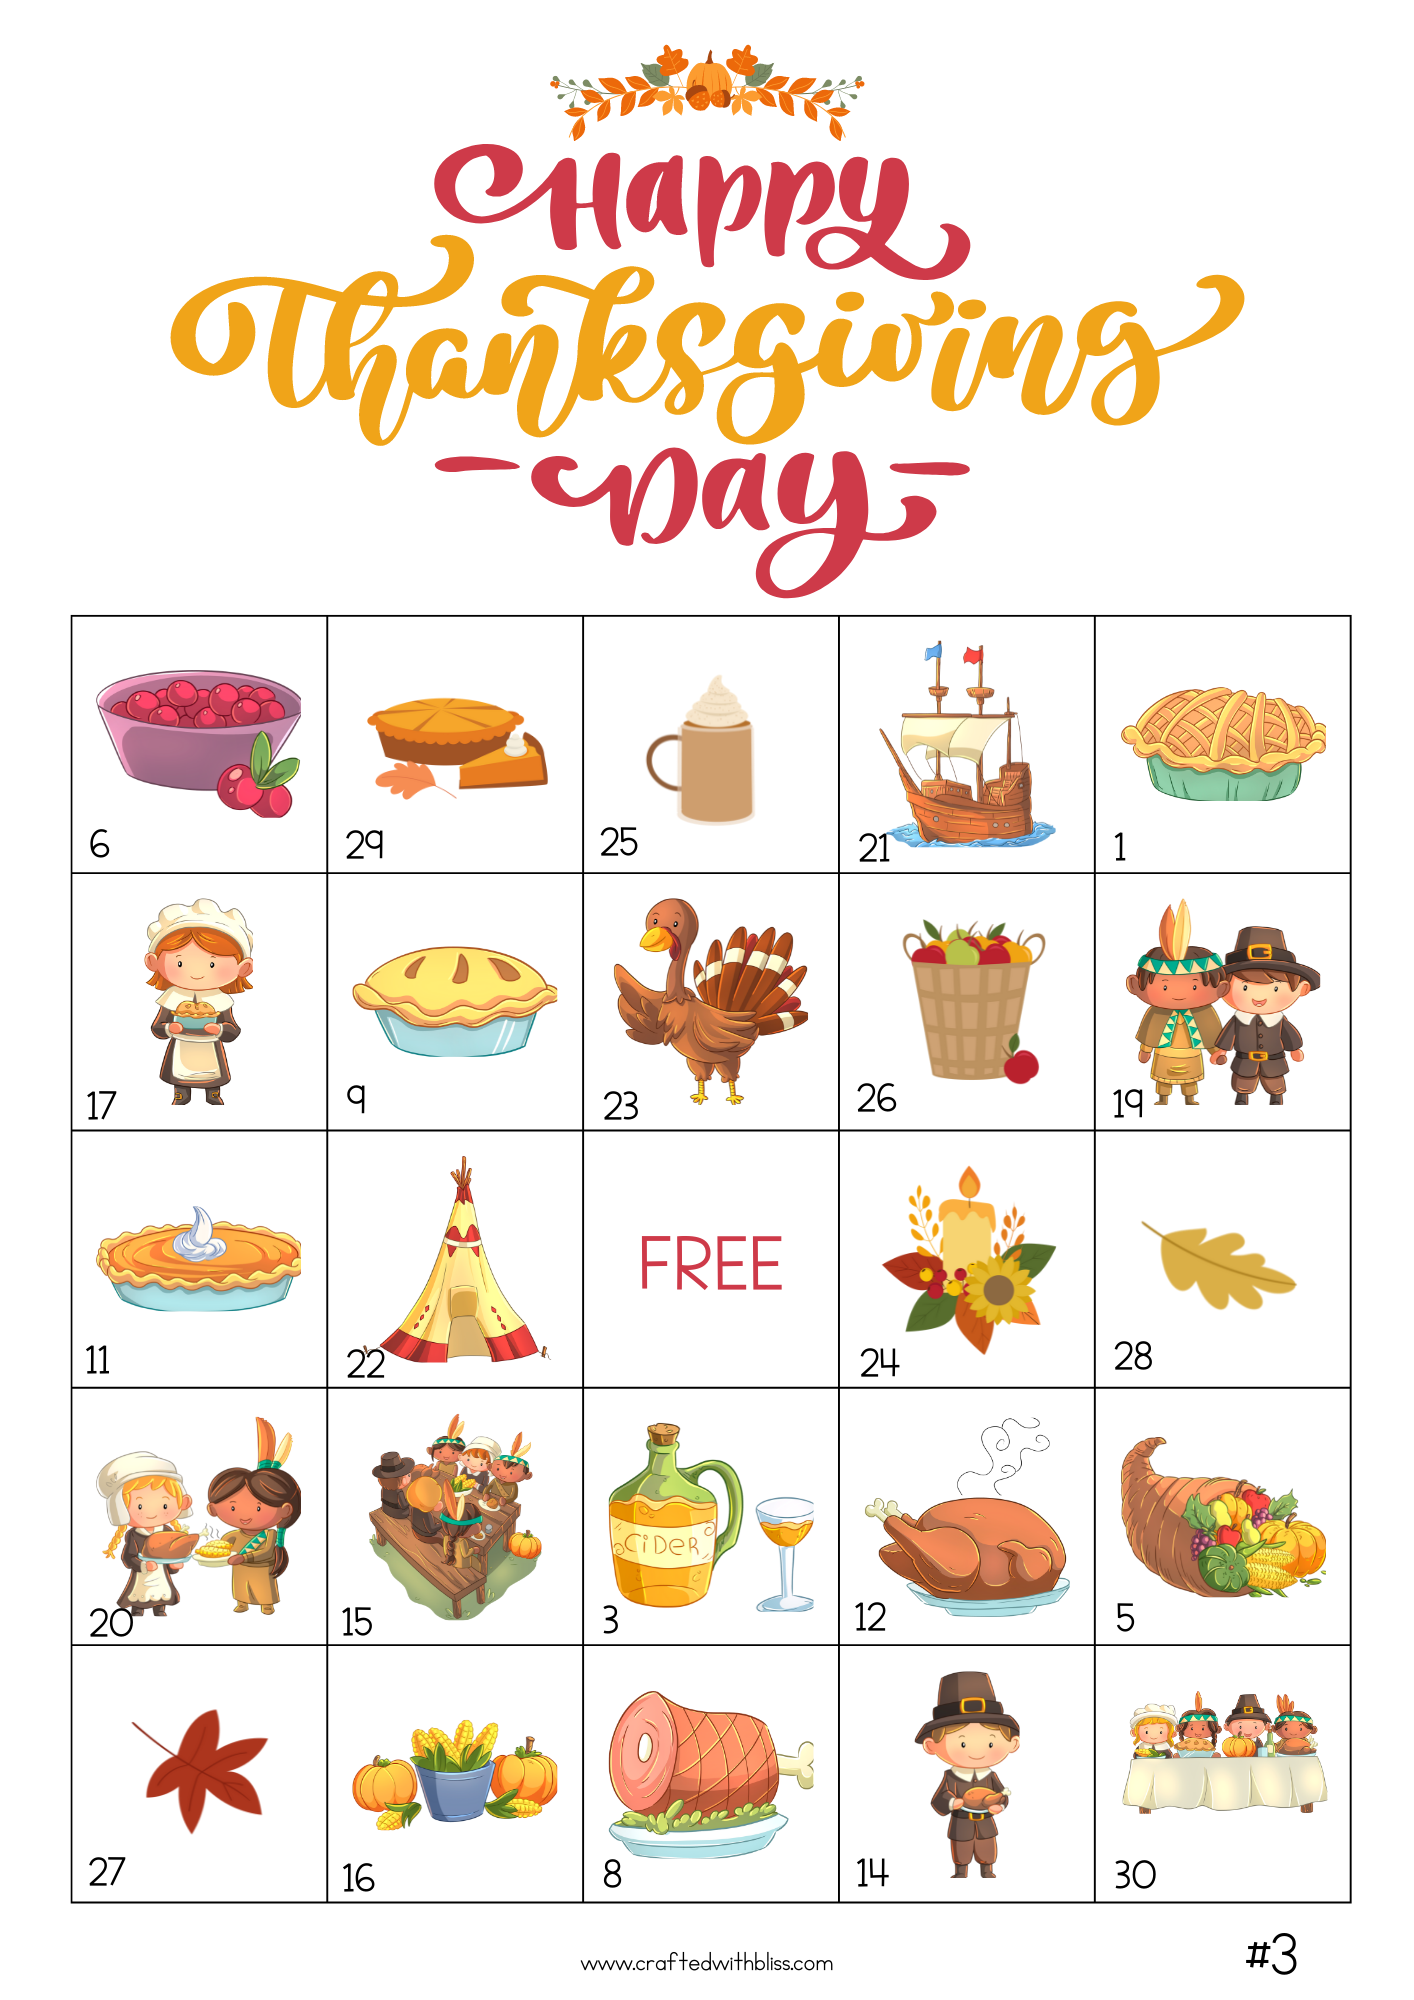 50 Thanksgiving Bingo Cards (5x5)